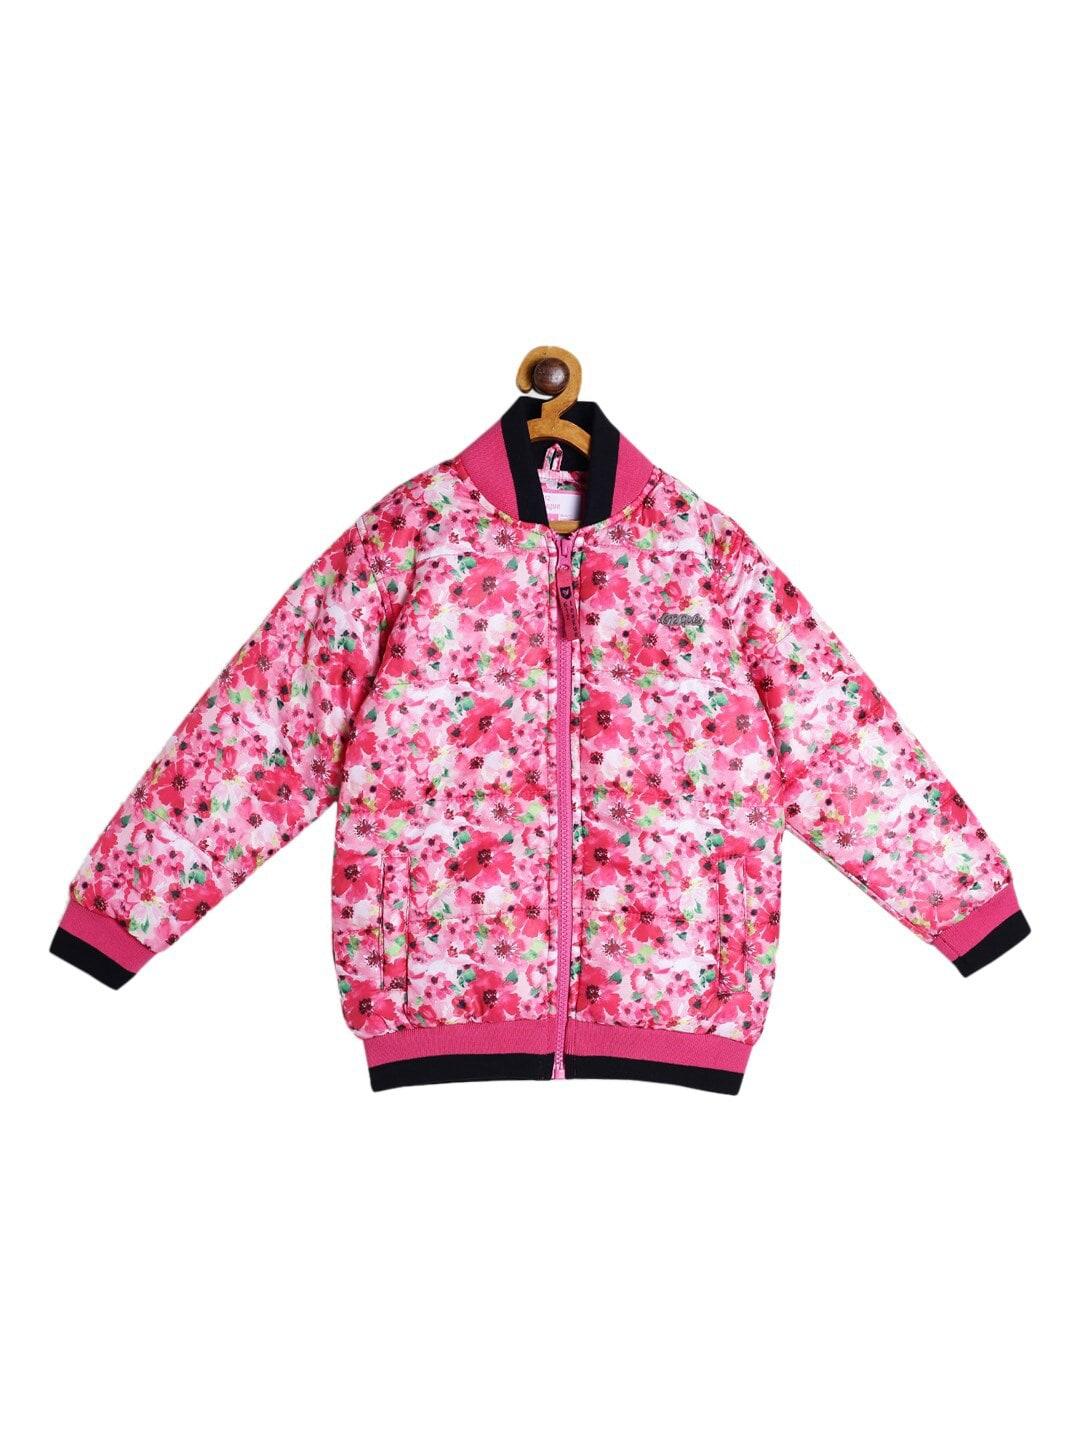 612league boys pink floral bomber jacket